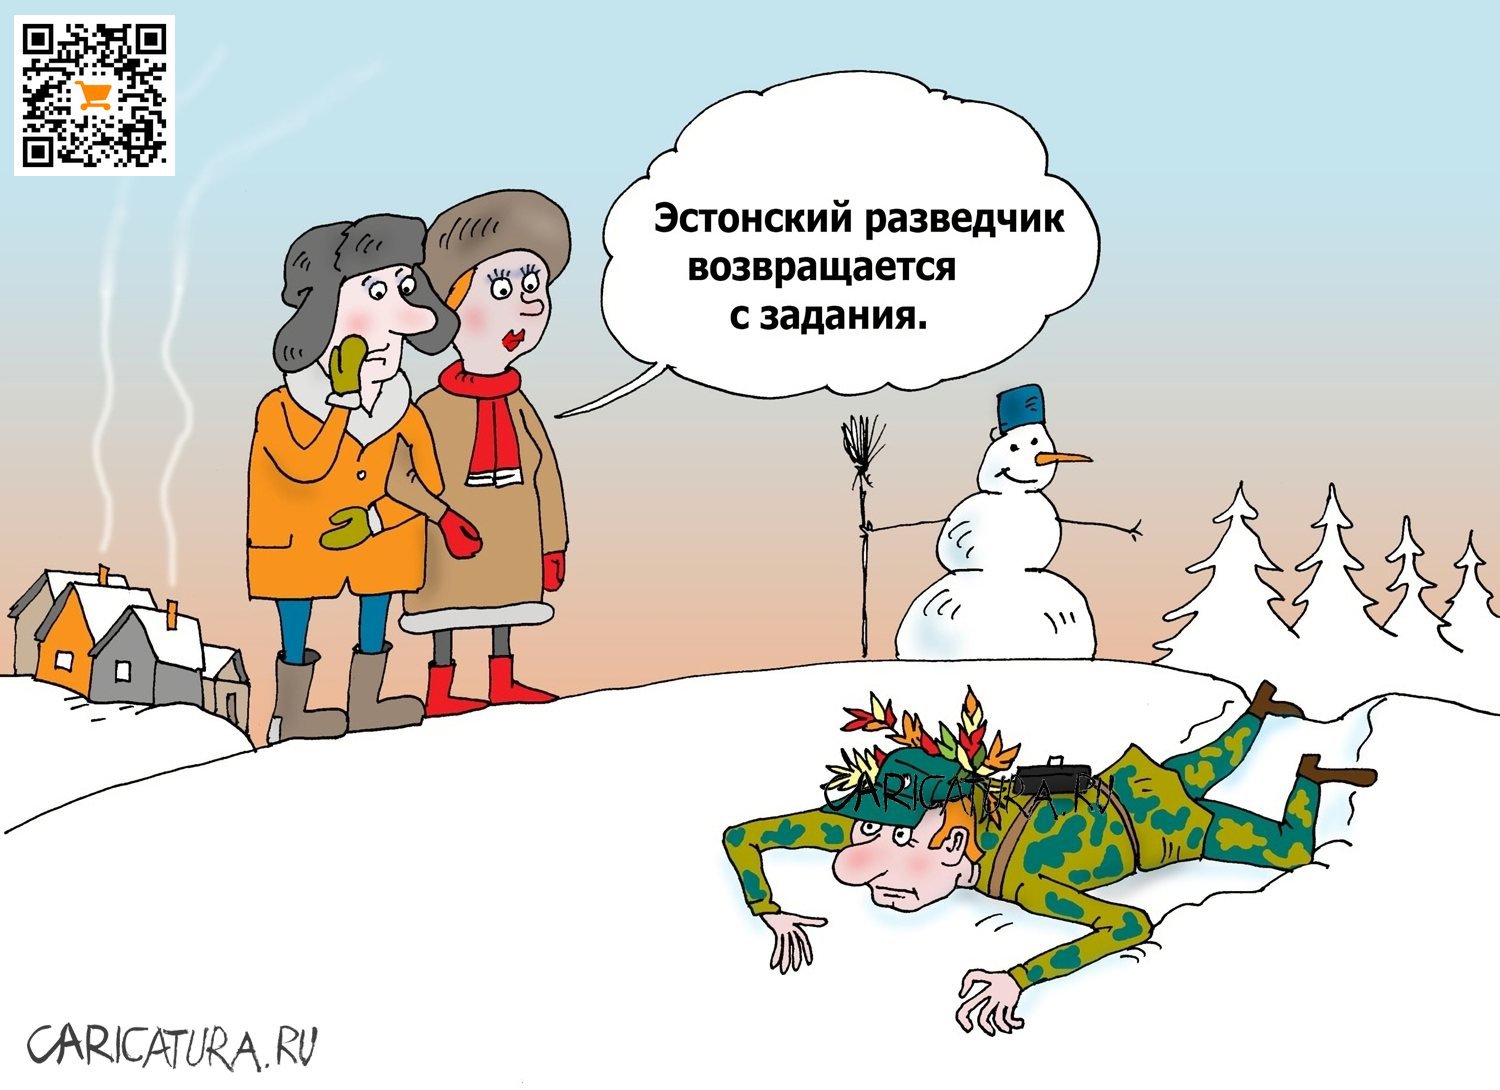 Карикатура "Эстонский разведчик", Валерий Тарасенко